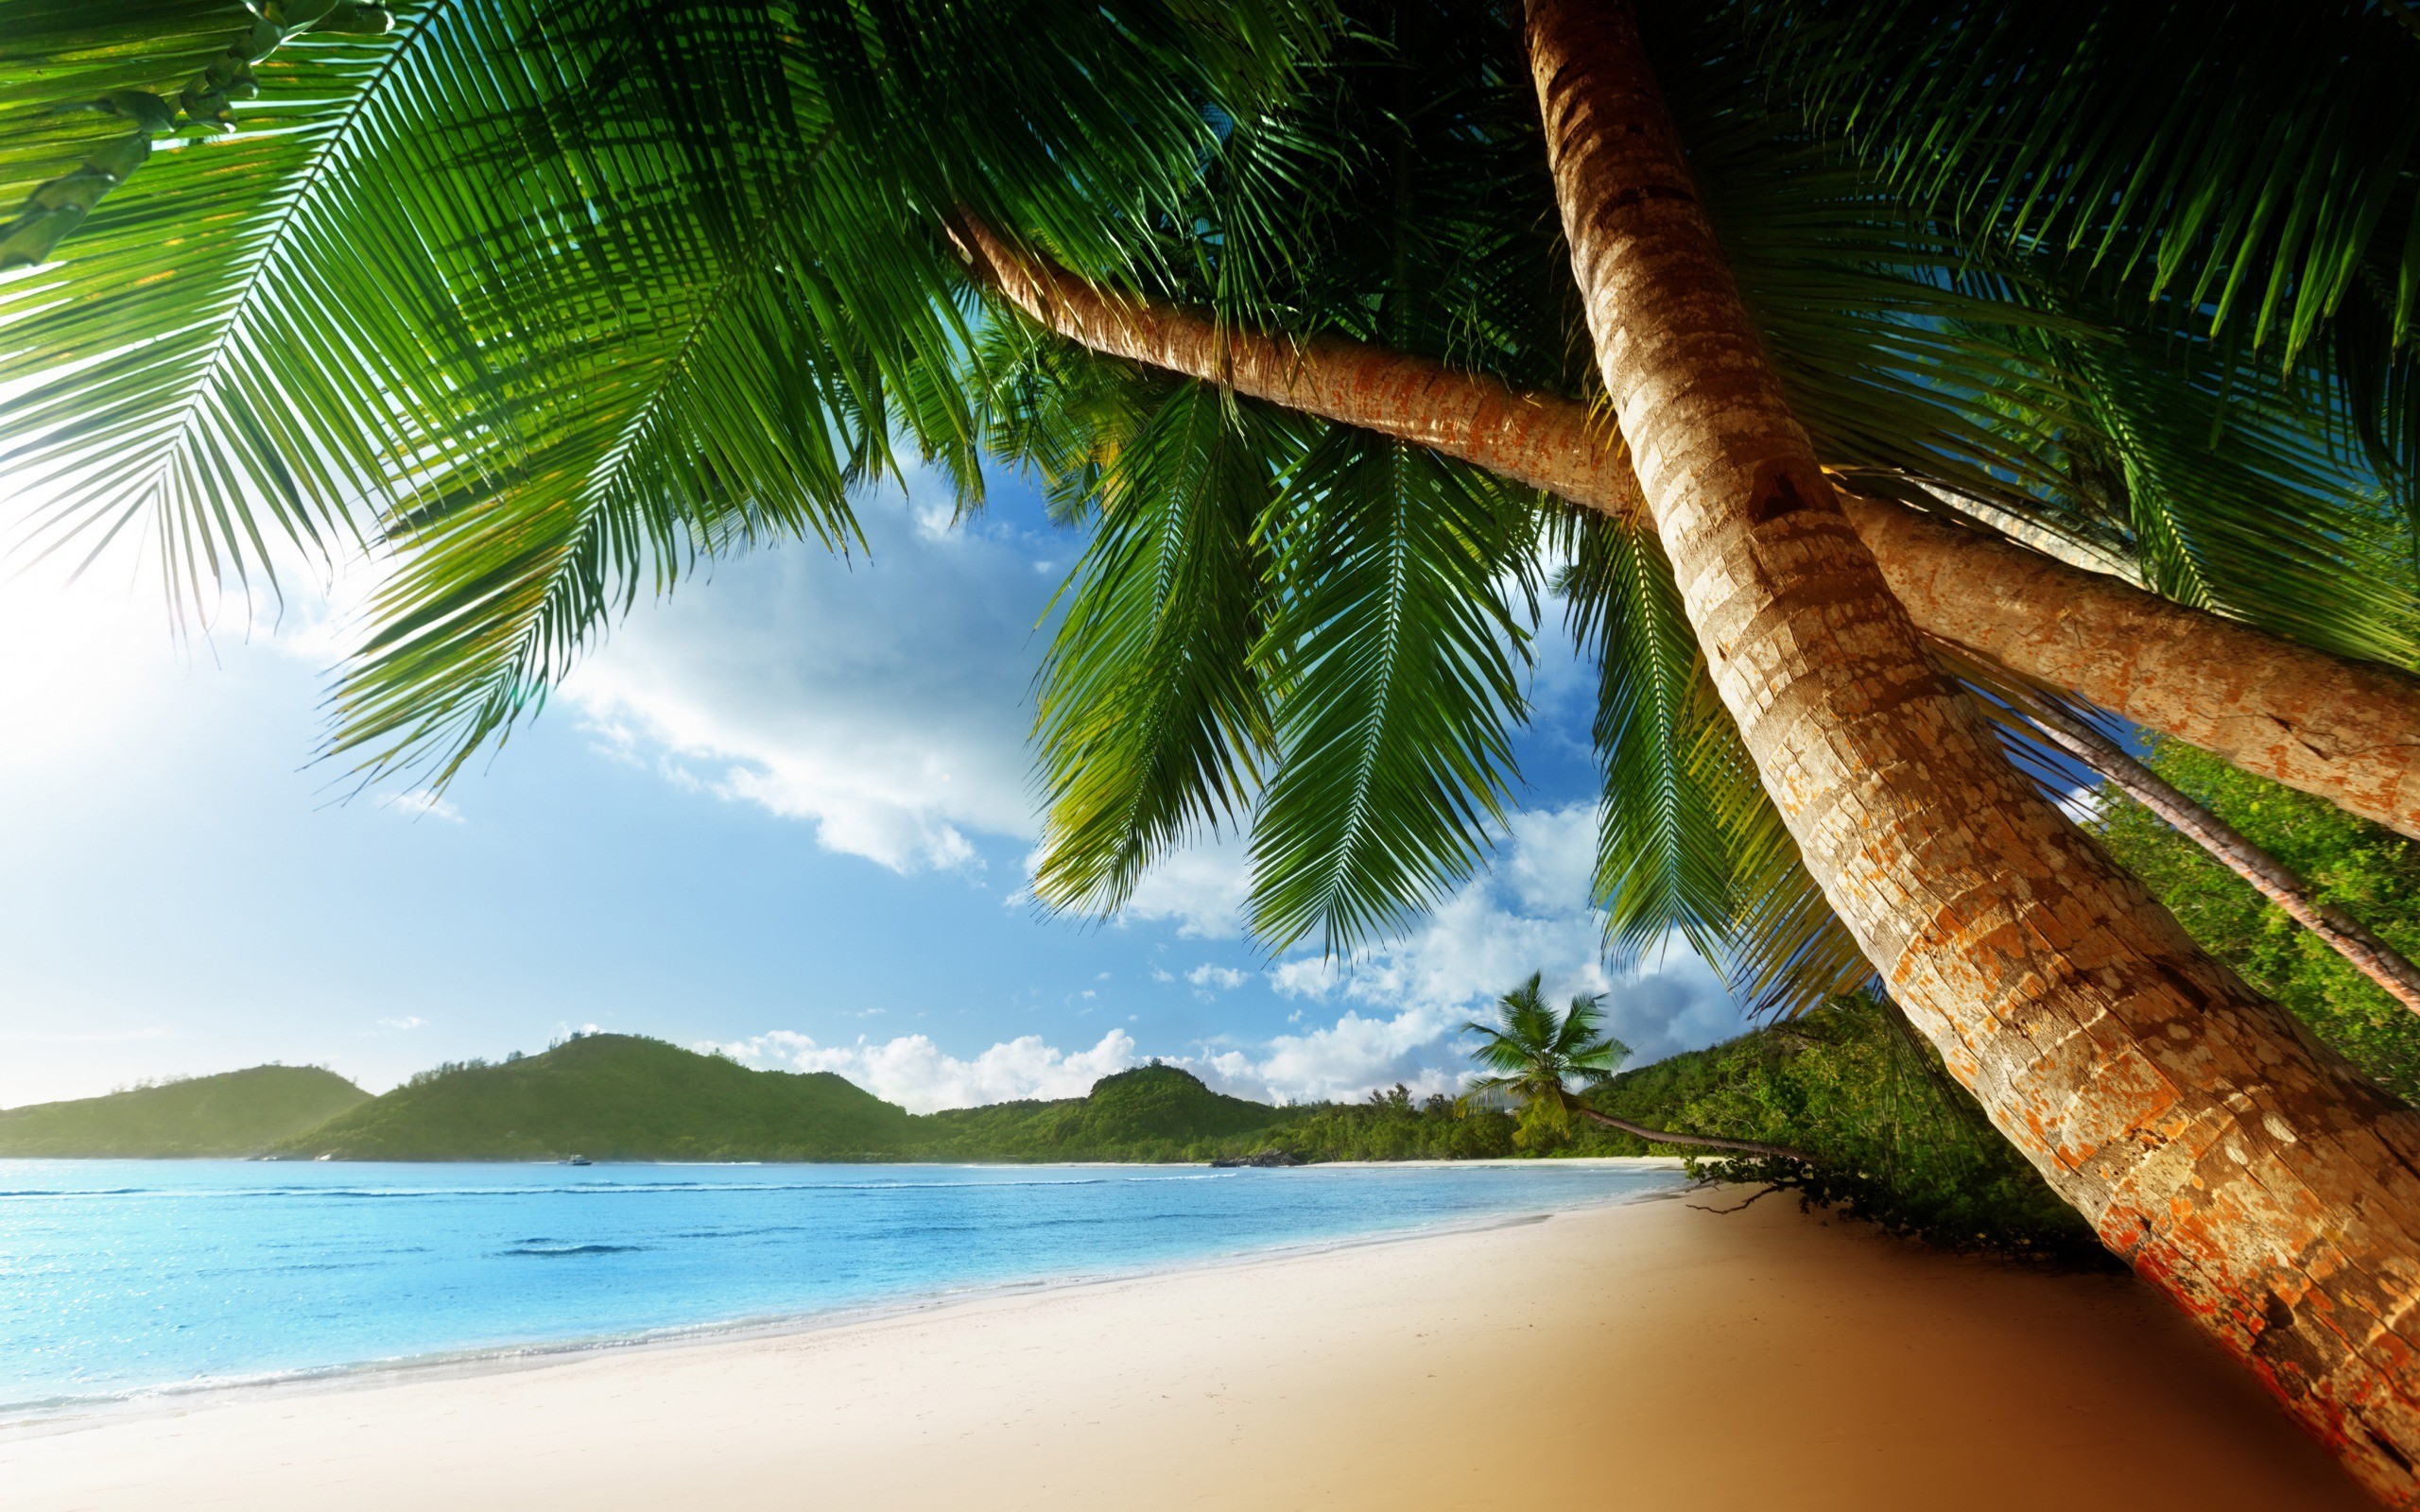 General 2560x1600 beach sea landscape palm trees tropical